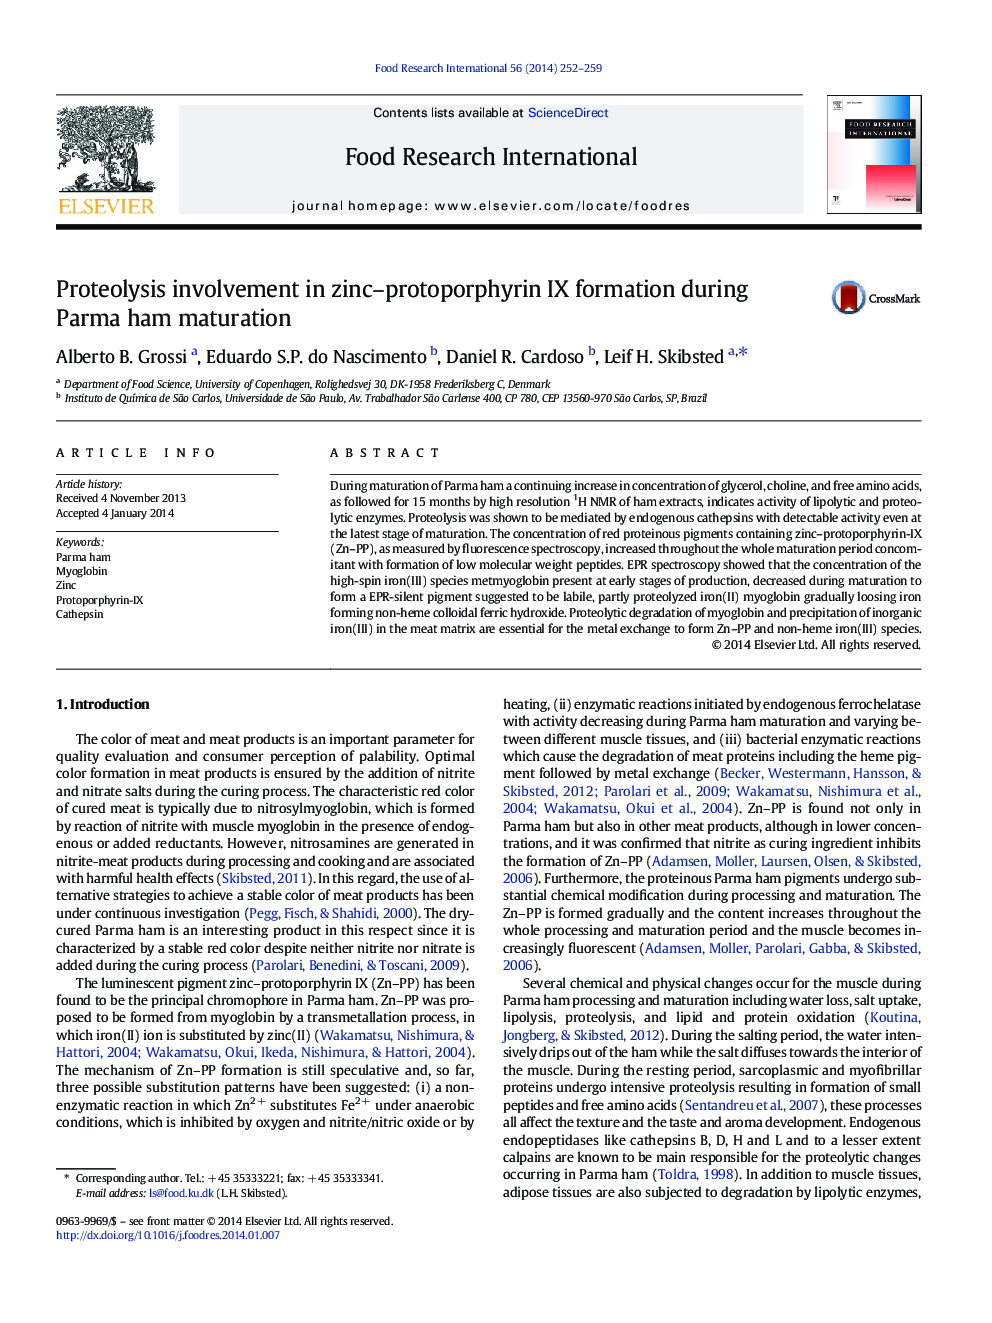 Proteolysis involvement in zinc-protoporphyrin IX formation during Parma ham maturation